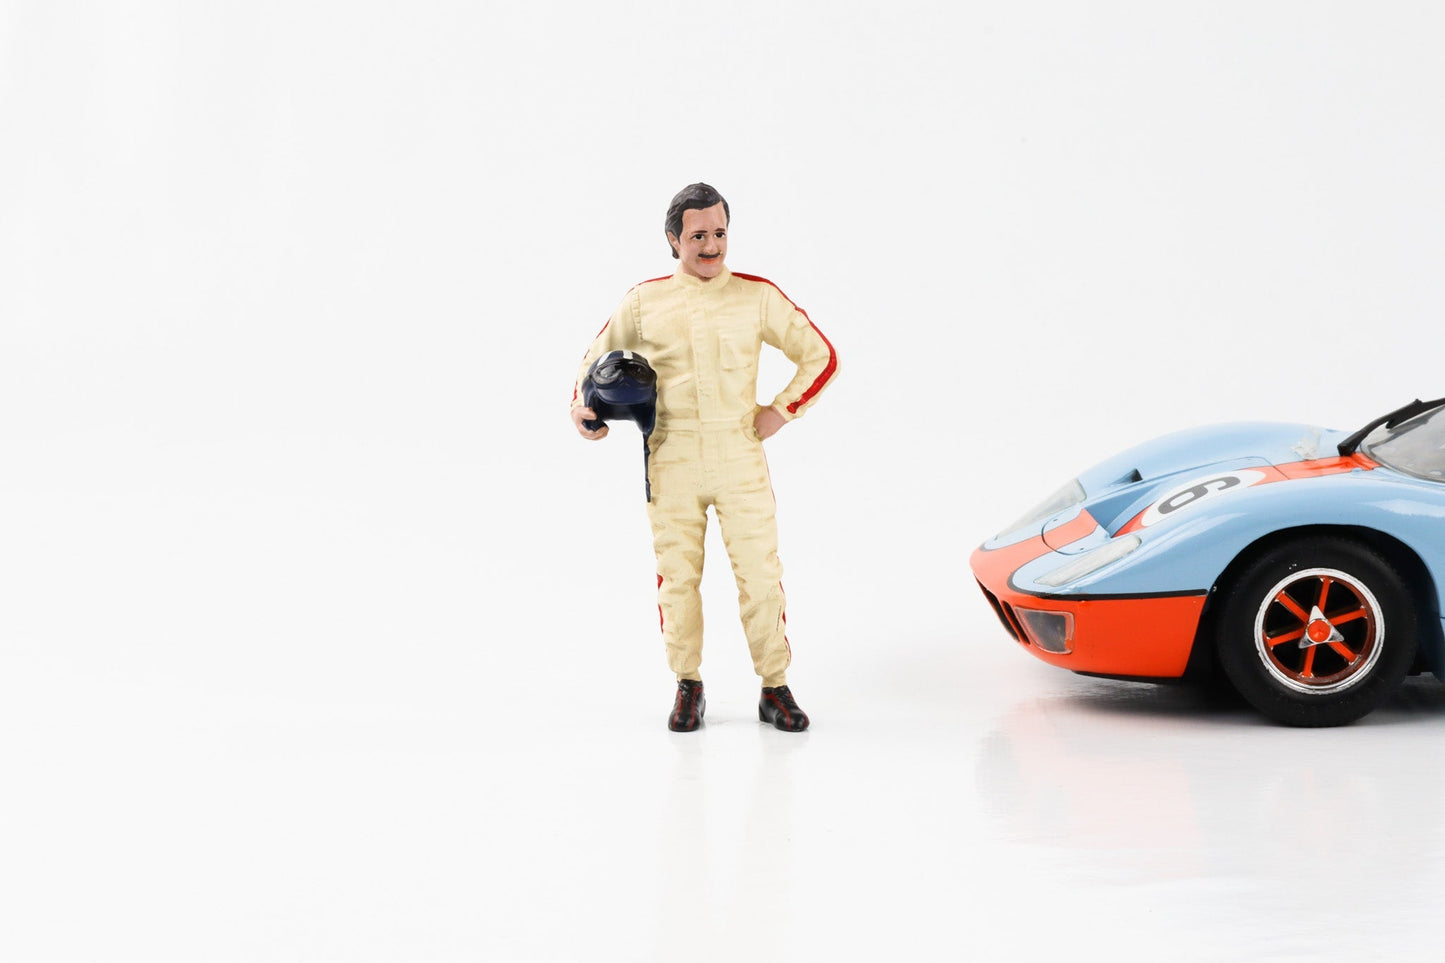 1:18 Figure Driver Le Mans F1 Racing Legend Racer Figures American Diorama